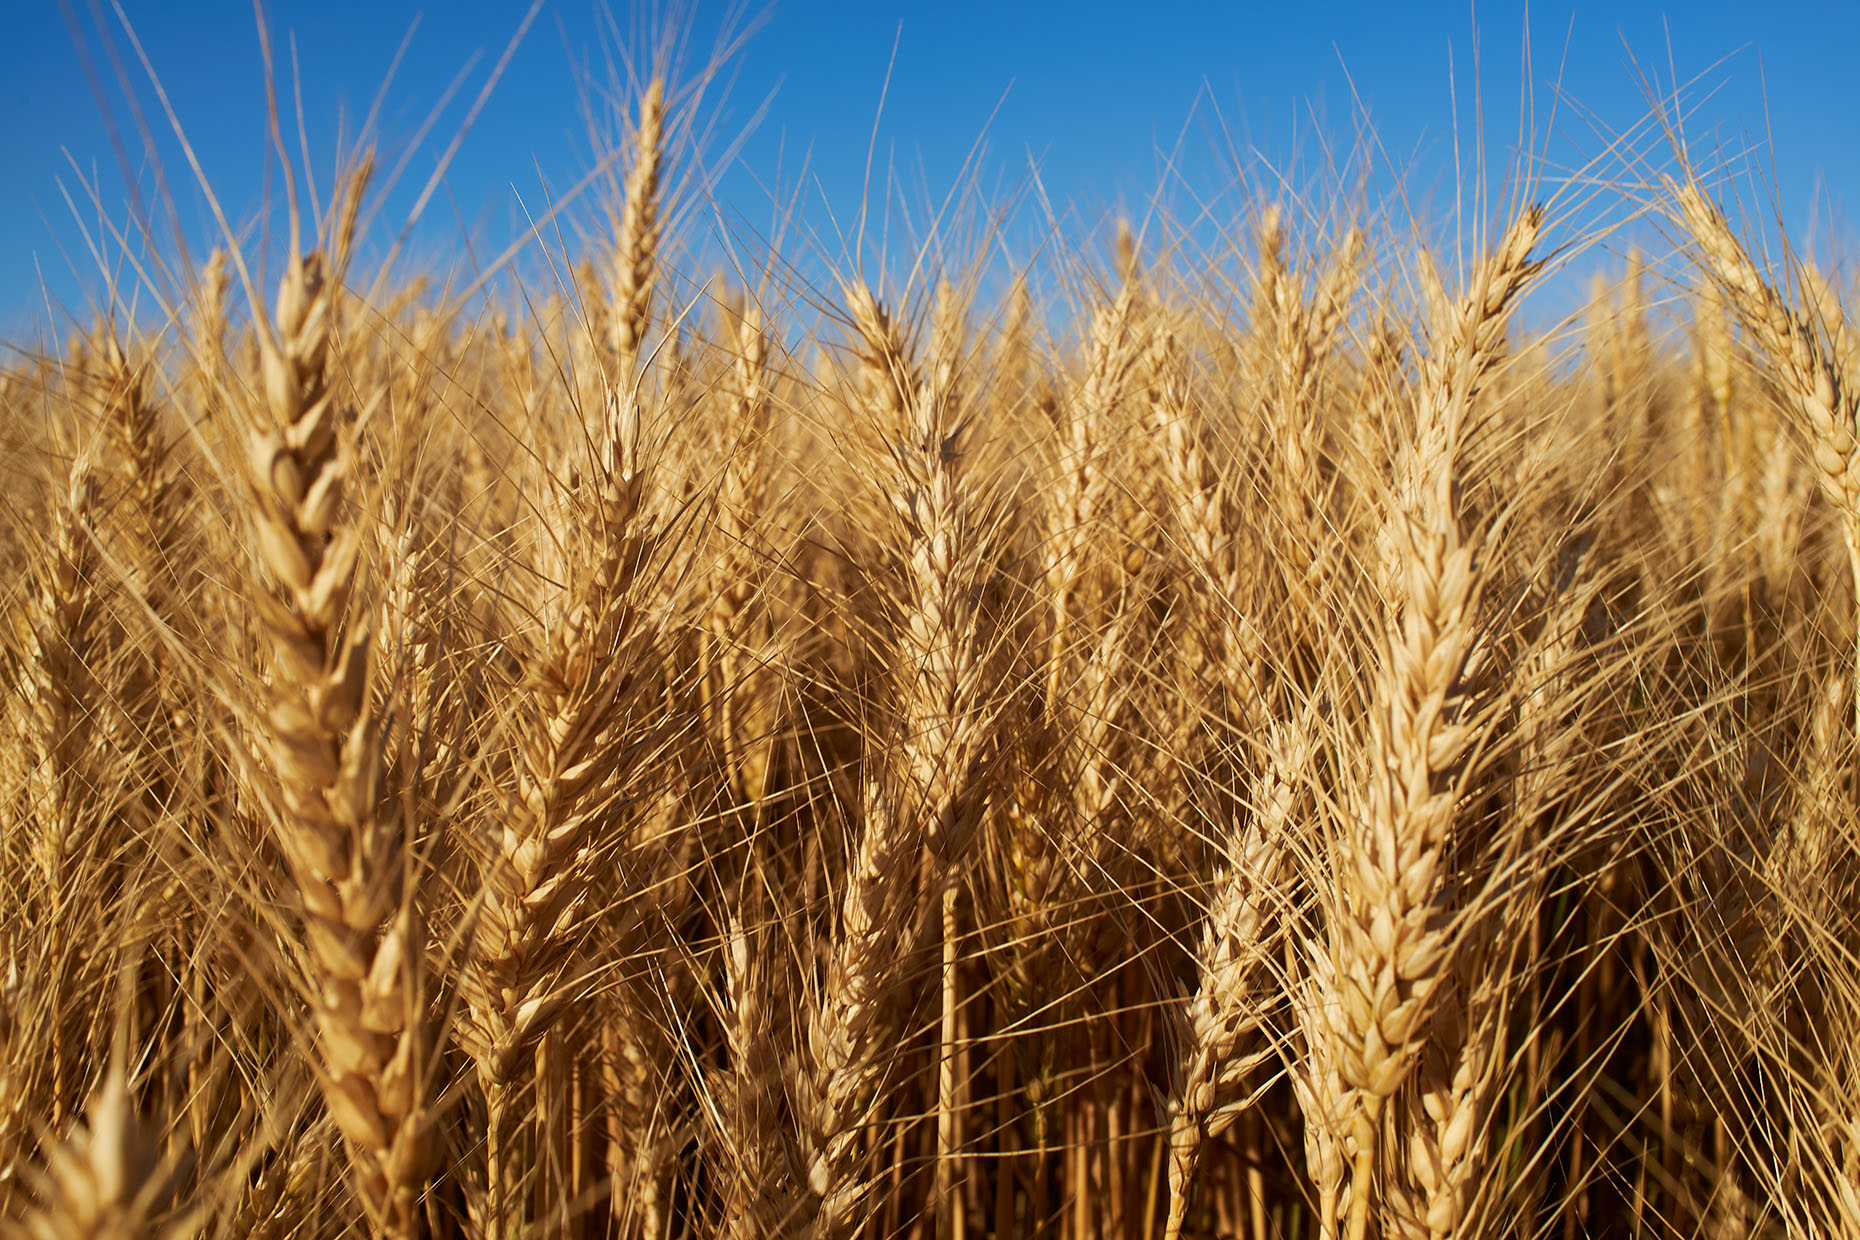 Wheat  Field,  Palouse Valley, Washington State, Cameron Davidson